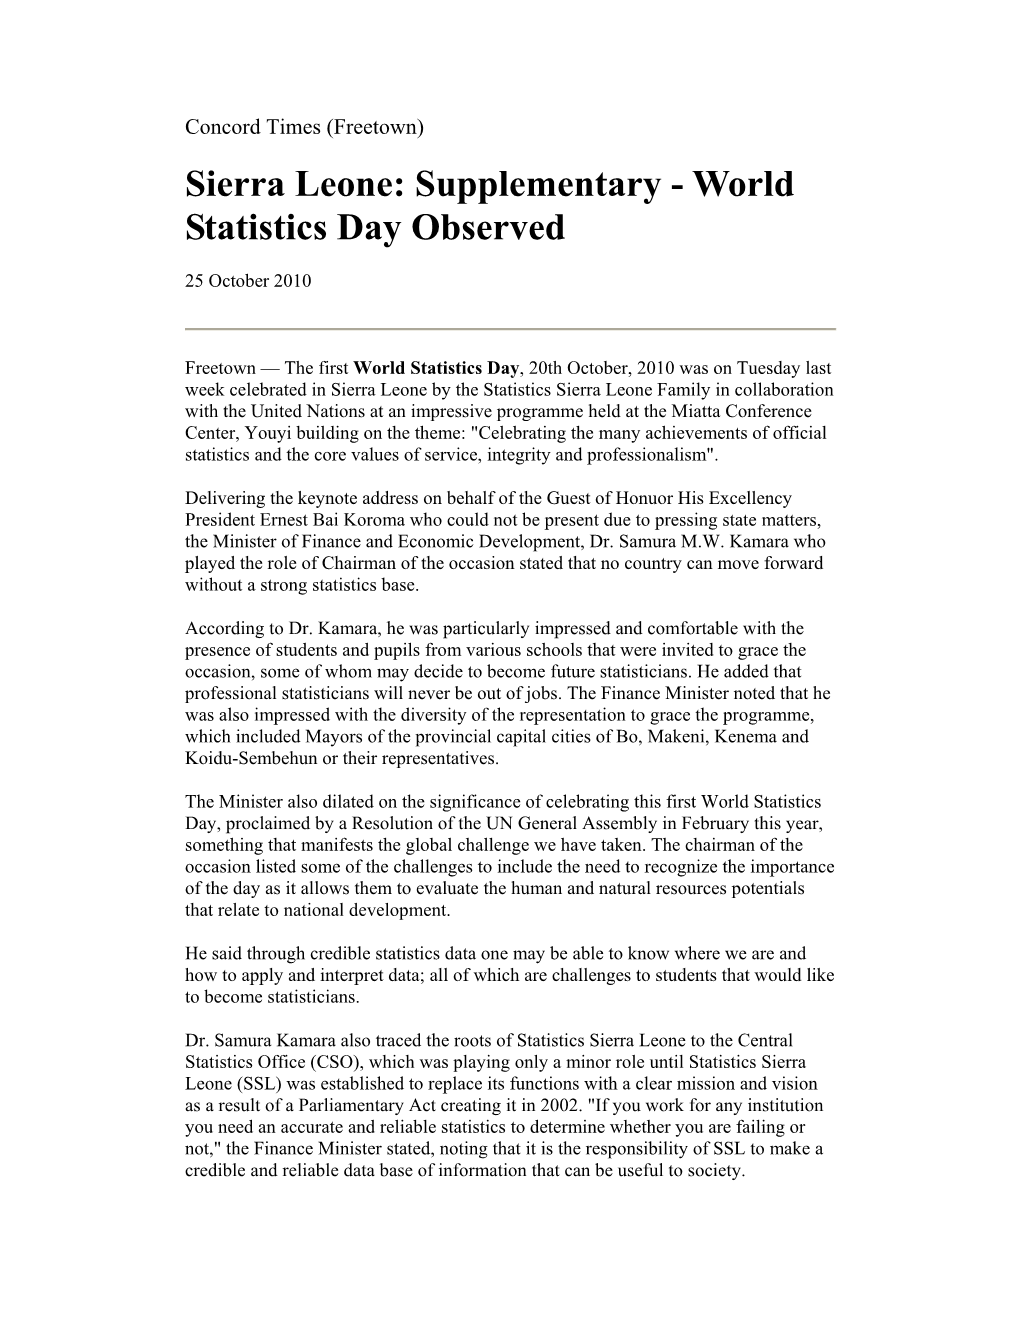 Sierra Leone: Supplementary - World Statistics Day Observed